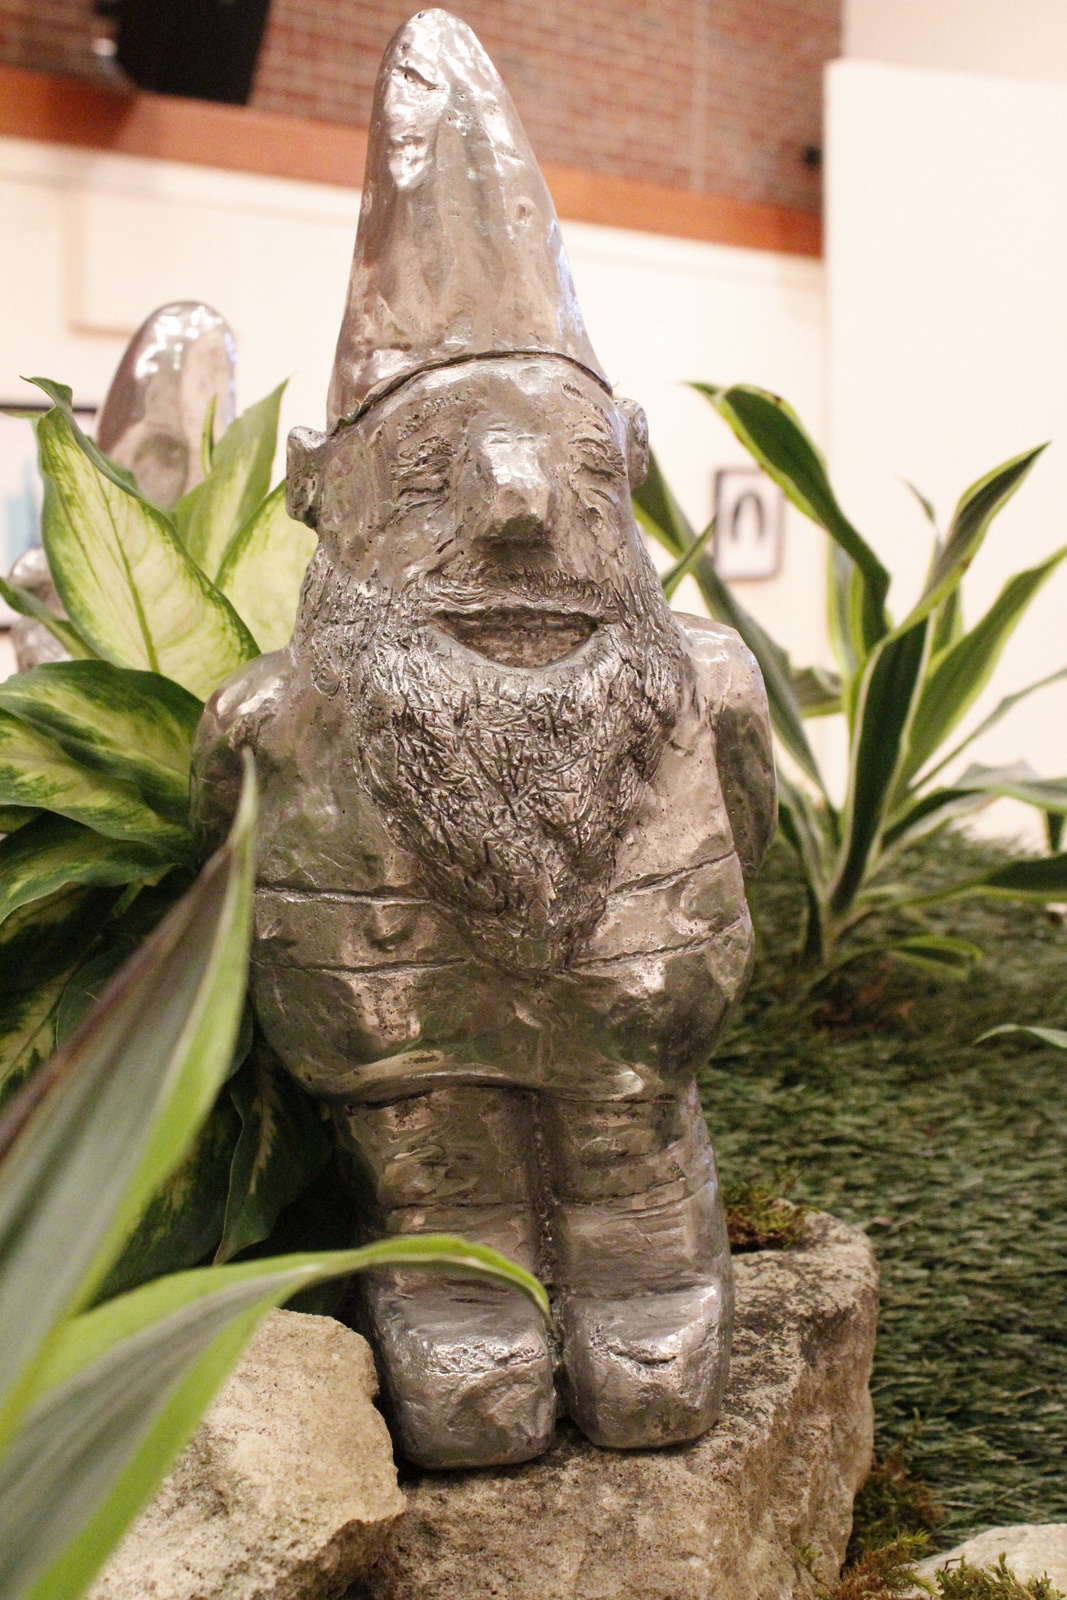 aluminum solid cast garden gnome joy emotion happy cheerful art Show Heavy polish reflective